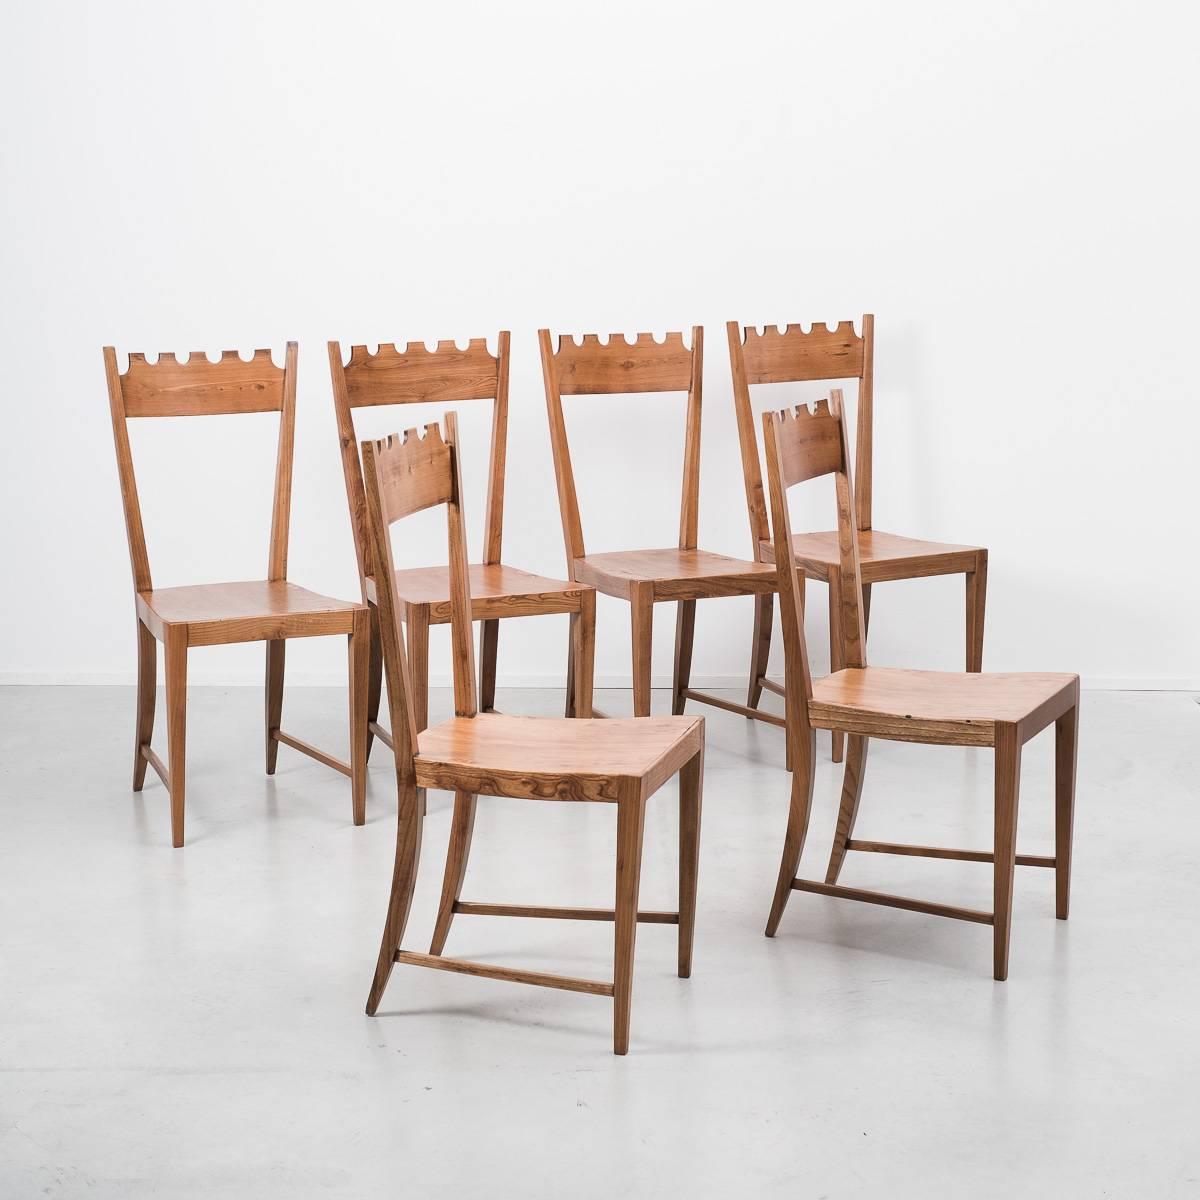 Italian Wavy Back Chairs Attributed to Paolo Buffa